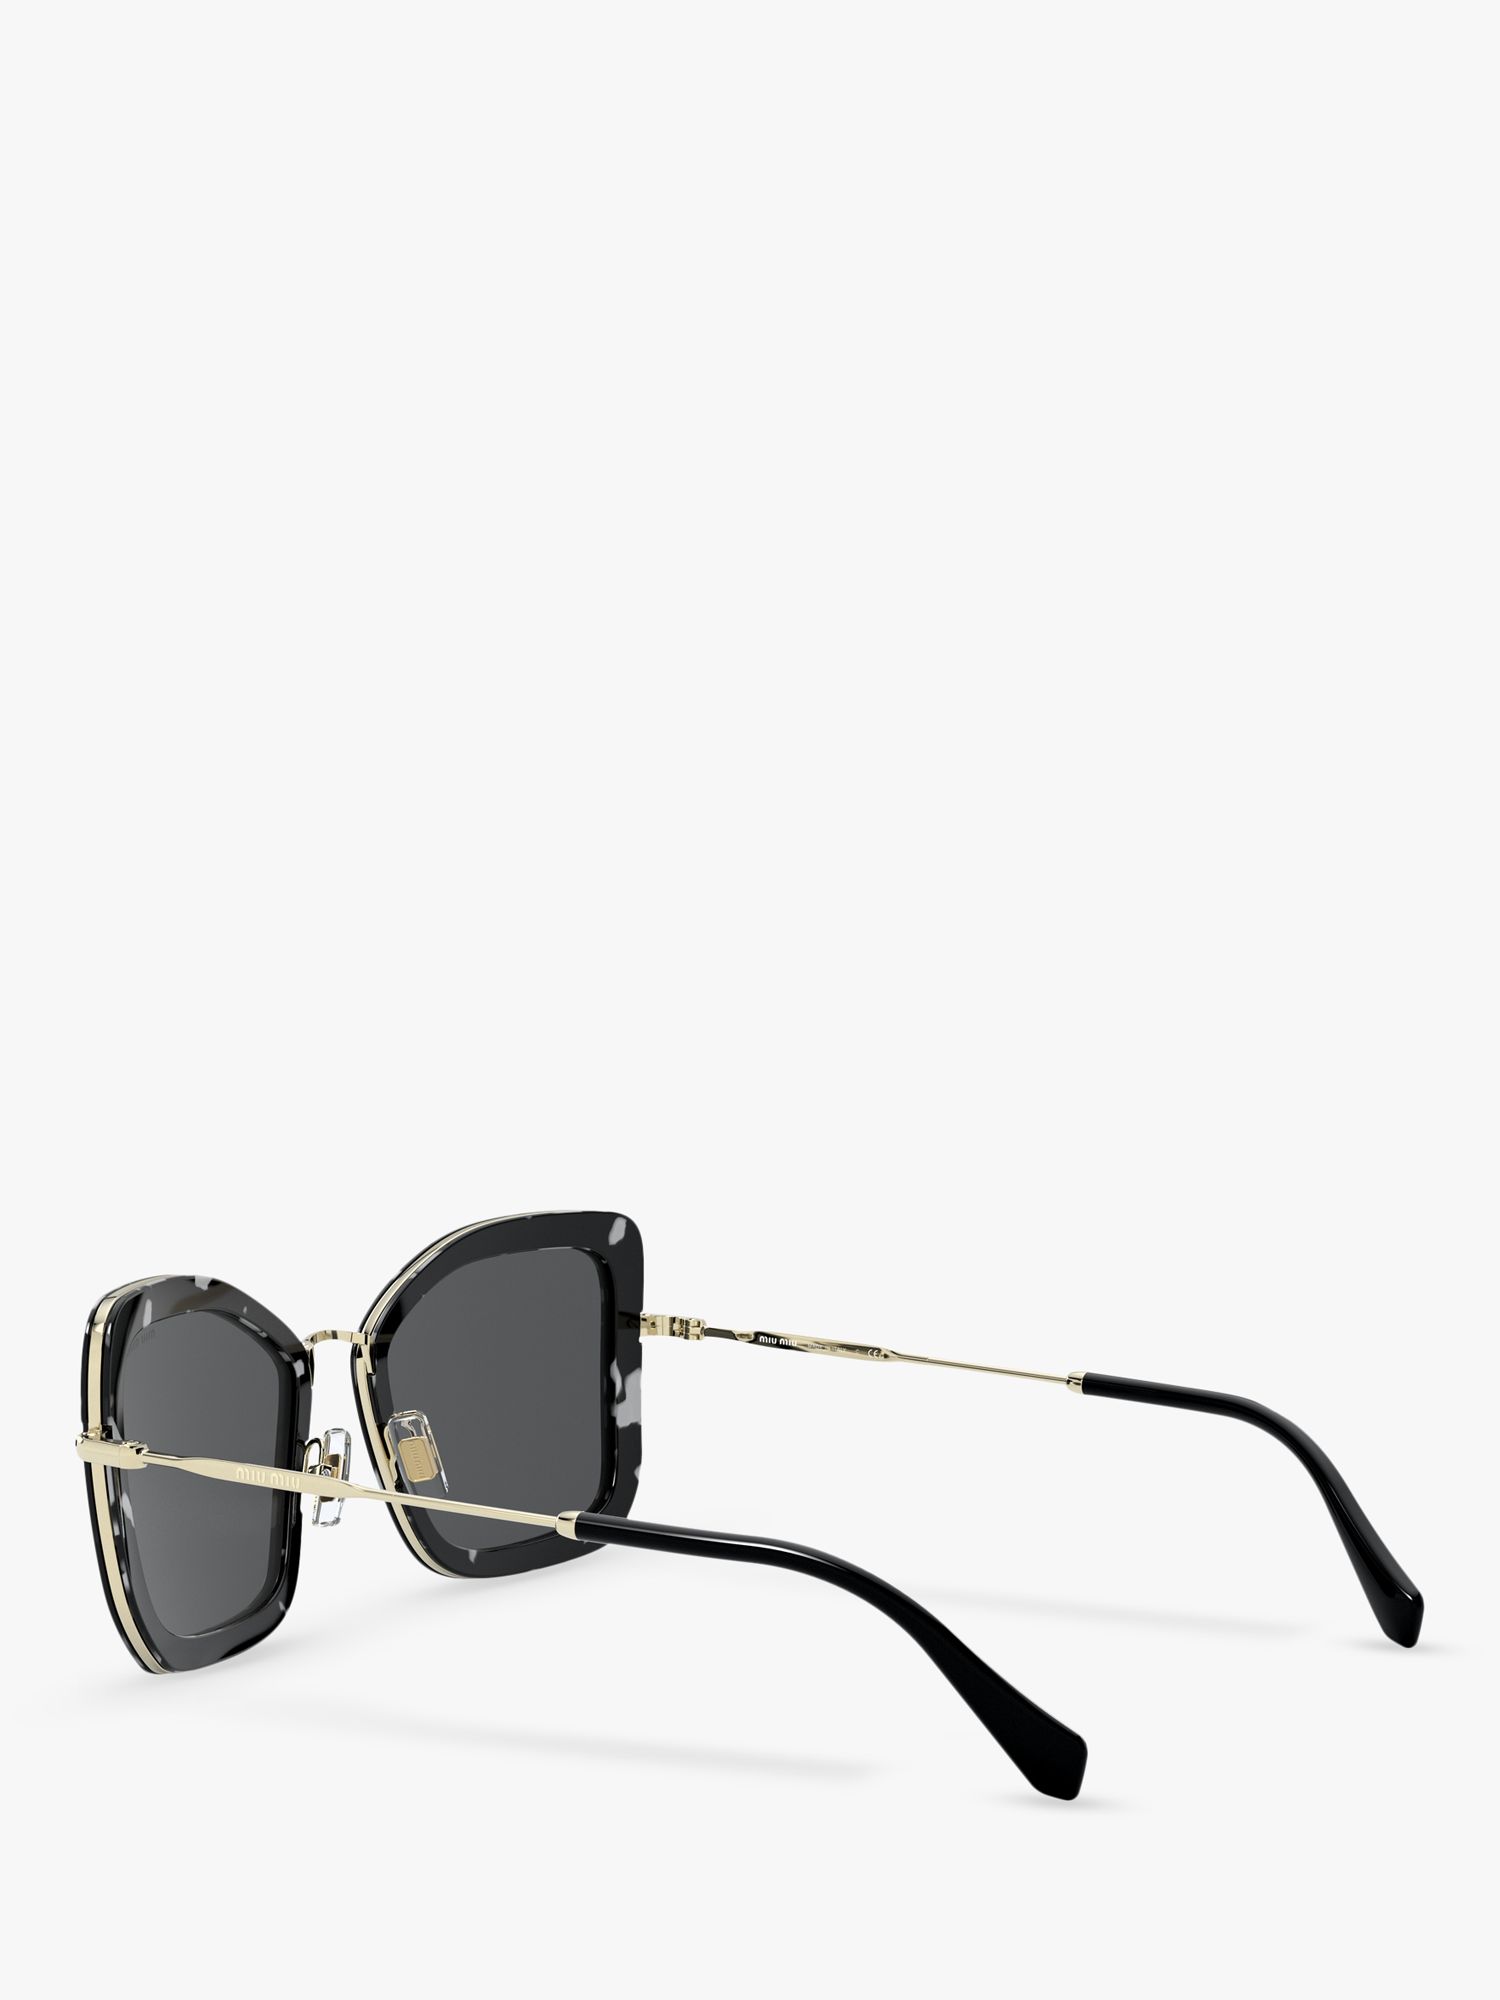 Buy Miu Miu MU 55VS Women's Irregular Sunglasses, Black/Grey Online at johnlewis.com